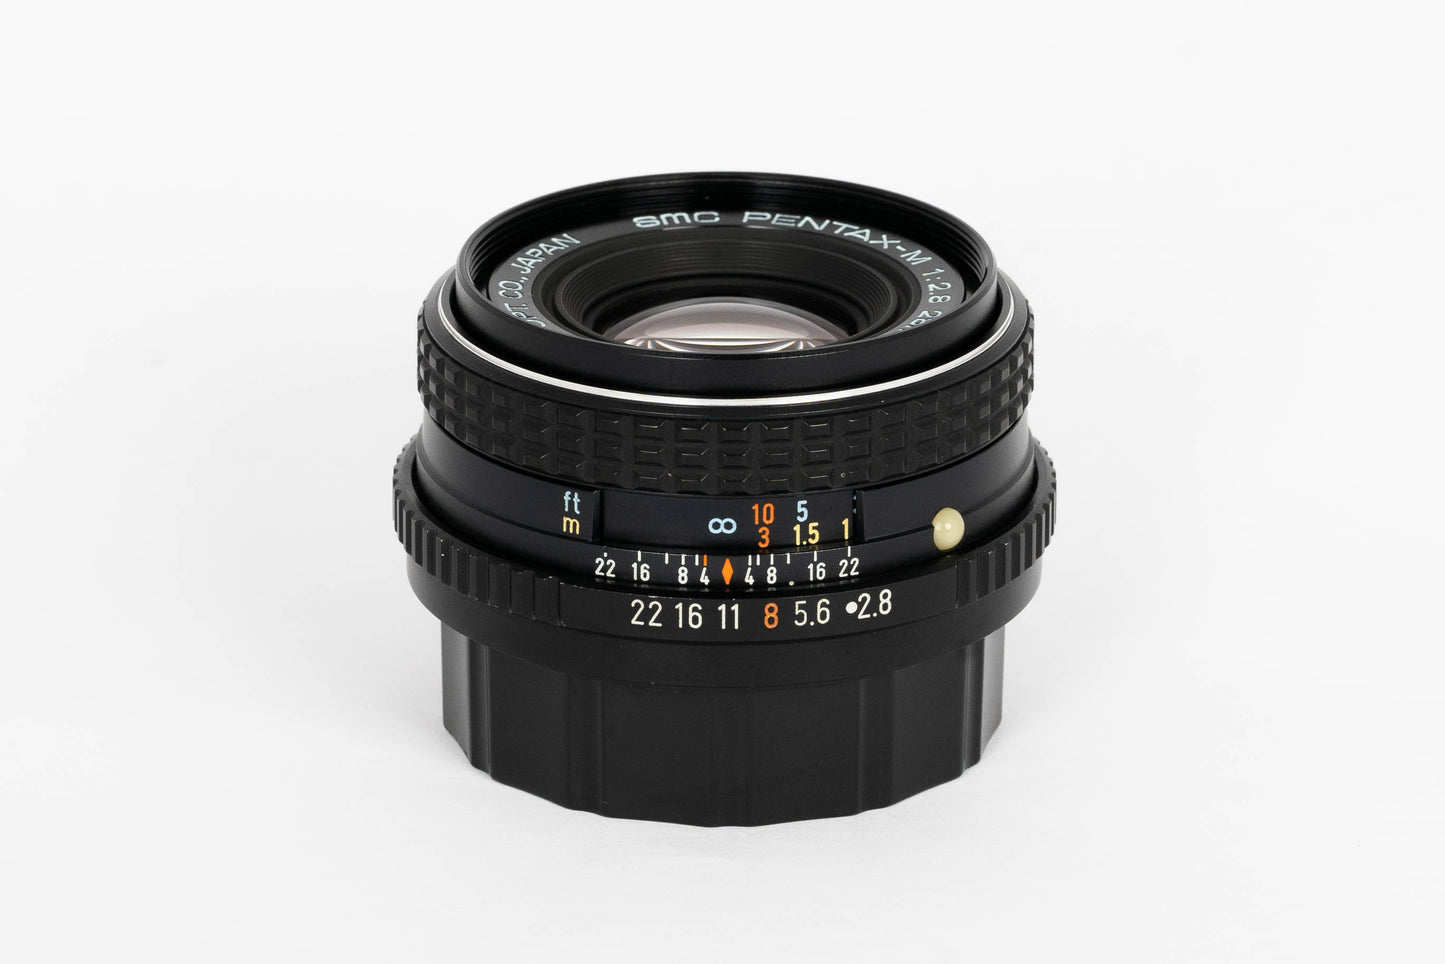 SMC Pentax-M 28mm F/2.8 Wide Angle MF Lens K Mount